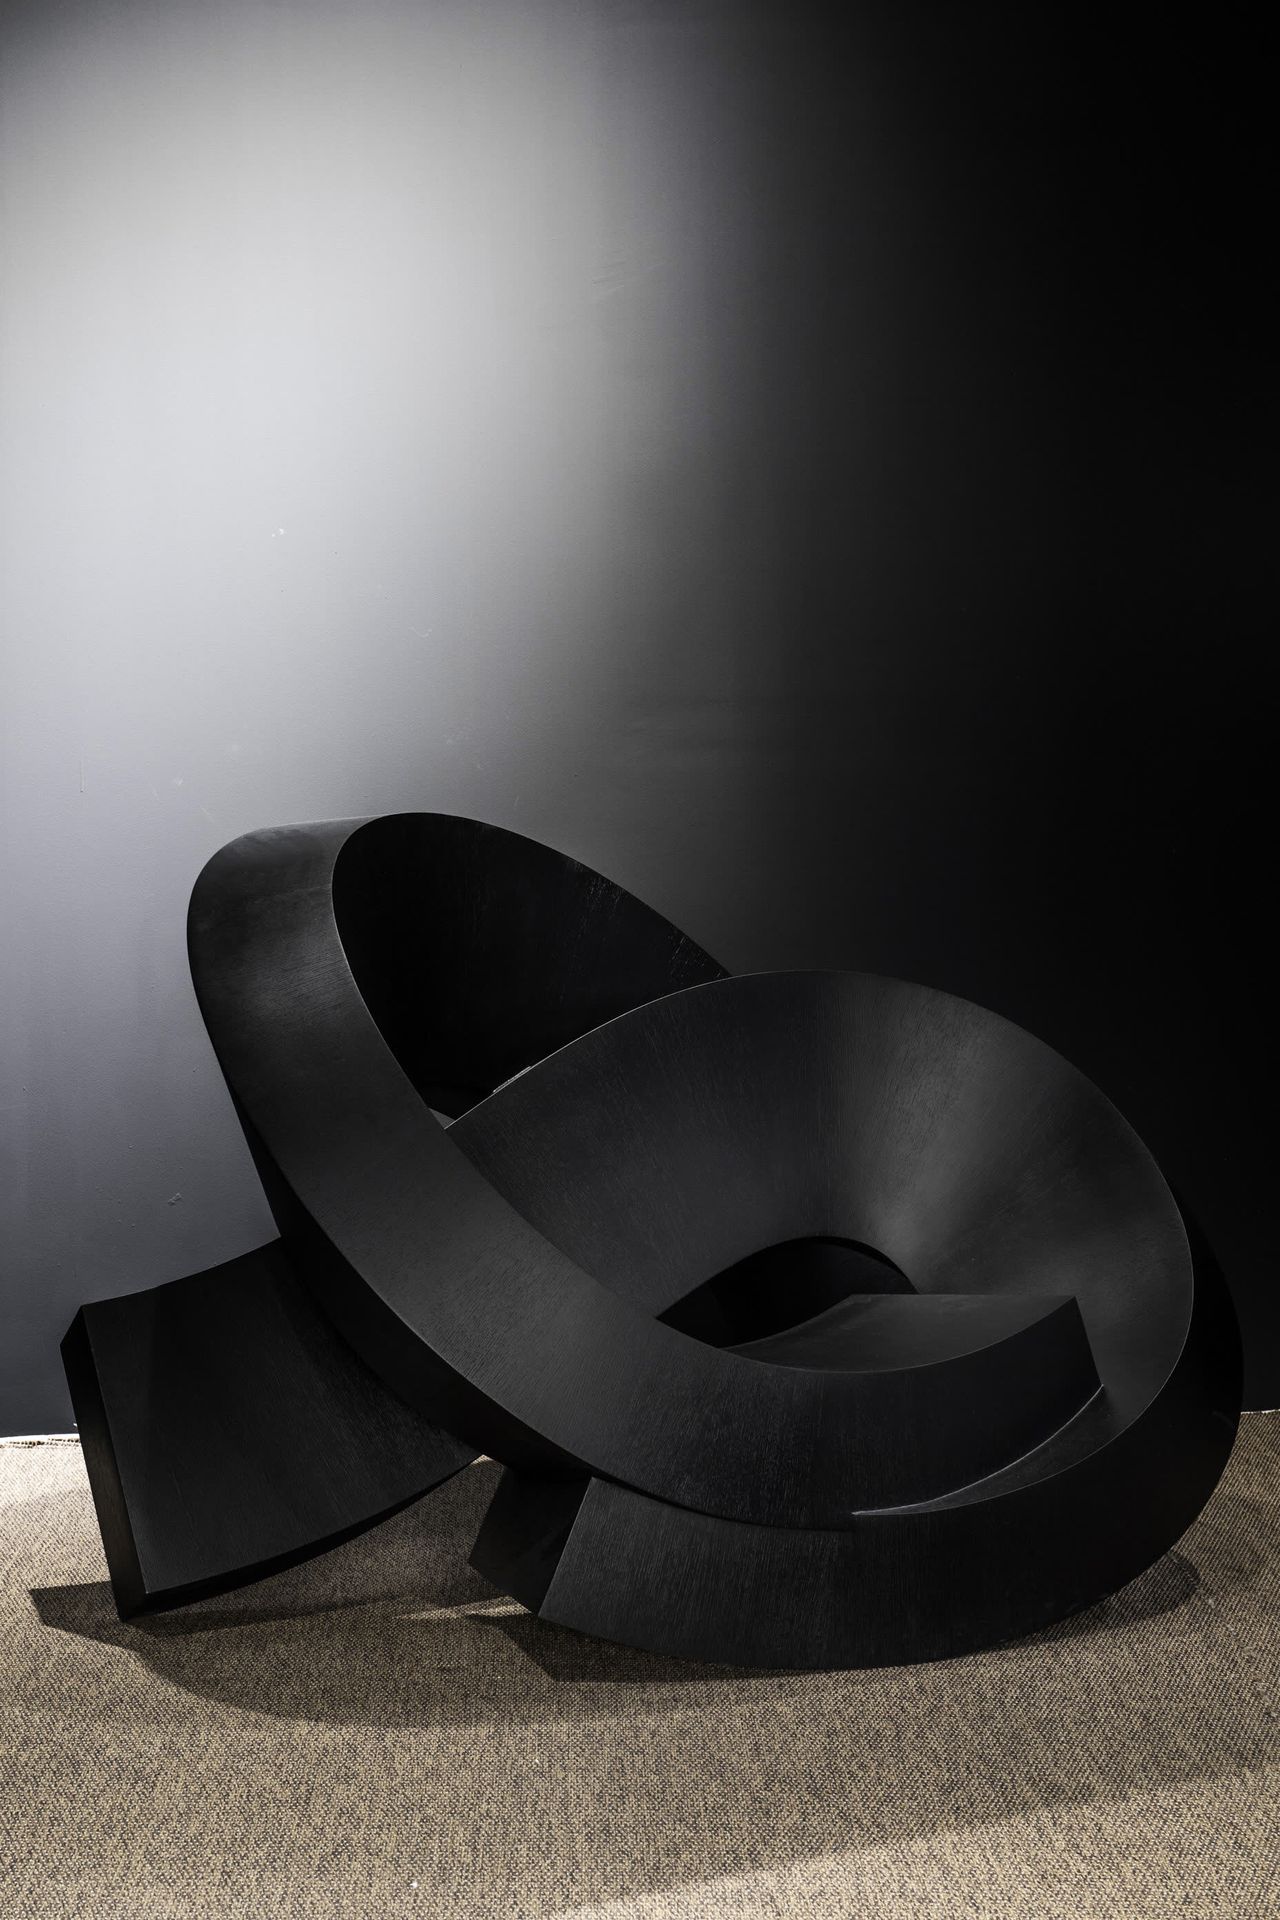 CHULAN KWAK 切向椅---扶手椅
黑色墨渍胶合板
2019
高105宽152深110厘米
出处：Iham画廊